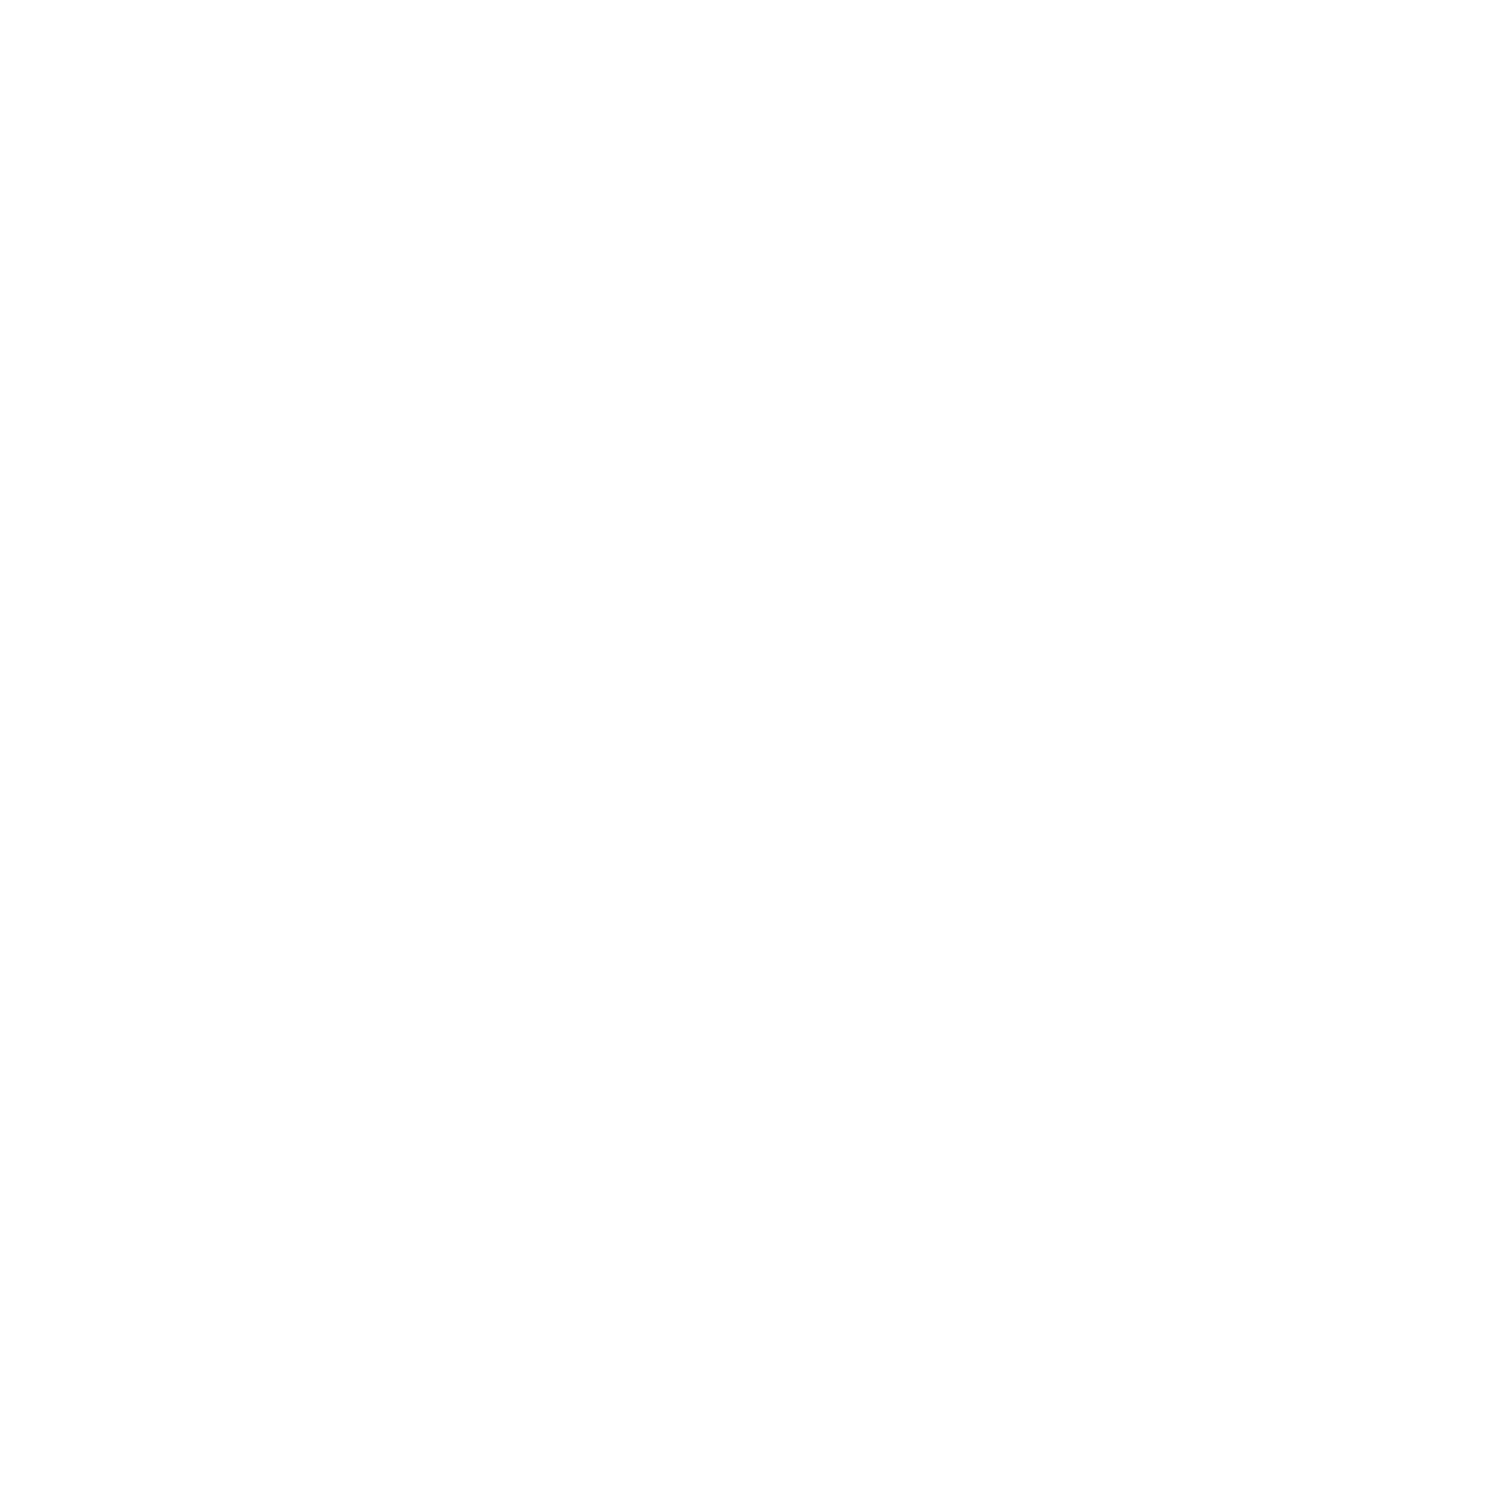 Open Data Delaware